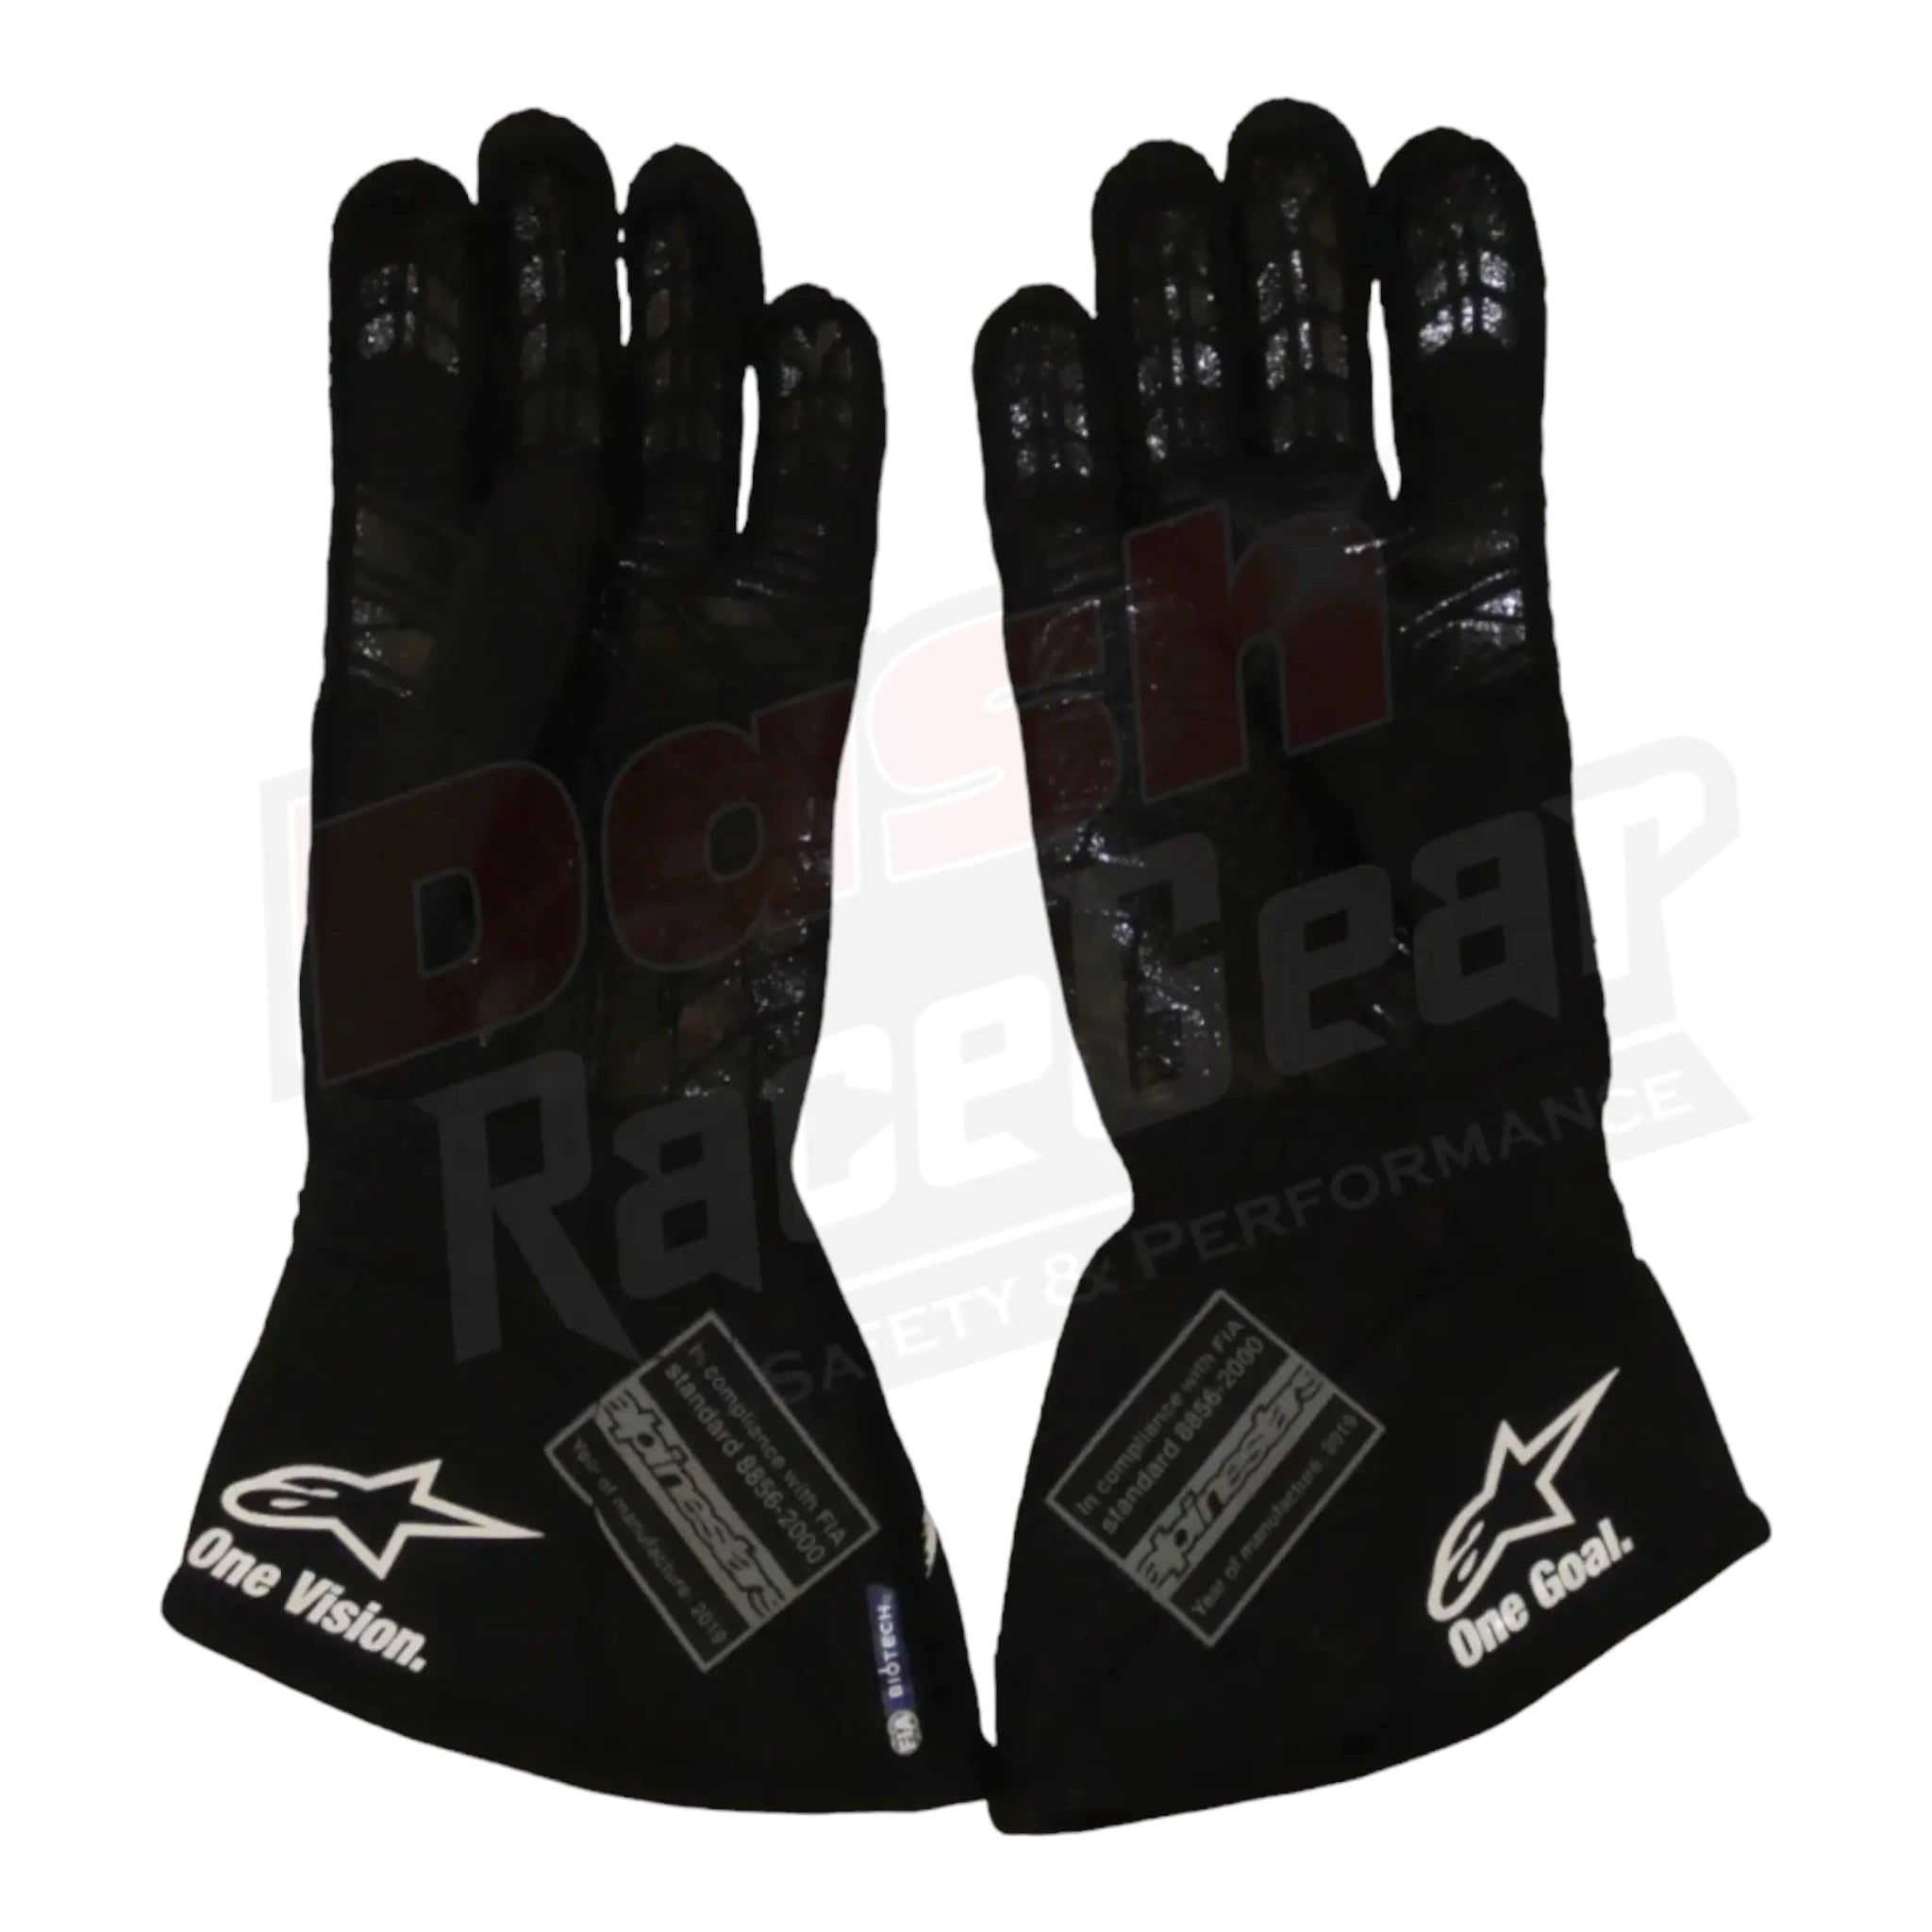 2019 Nico Hulkenberg Renault F1 Race Gloves